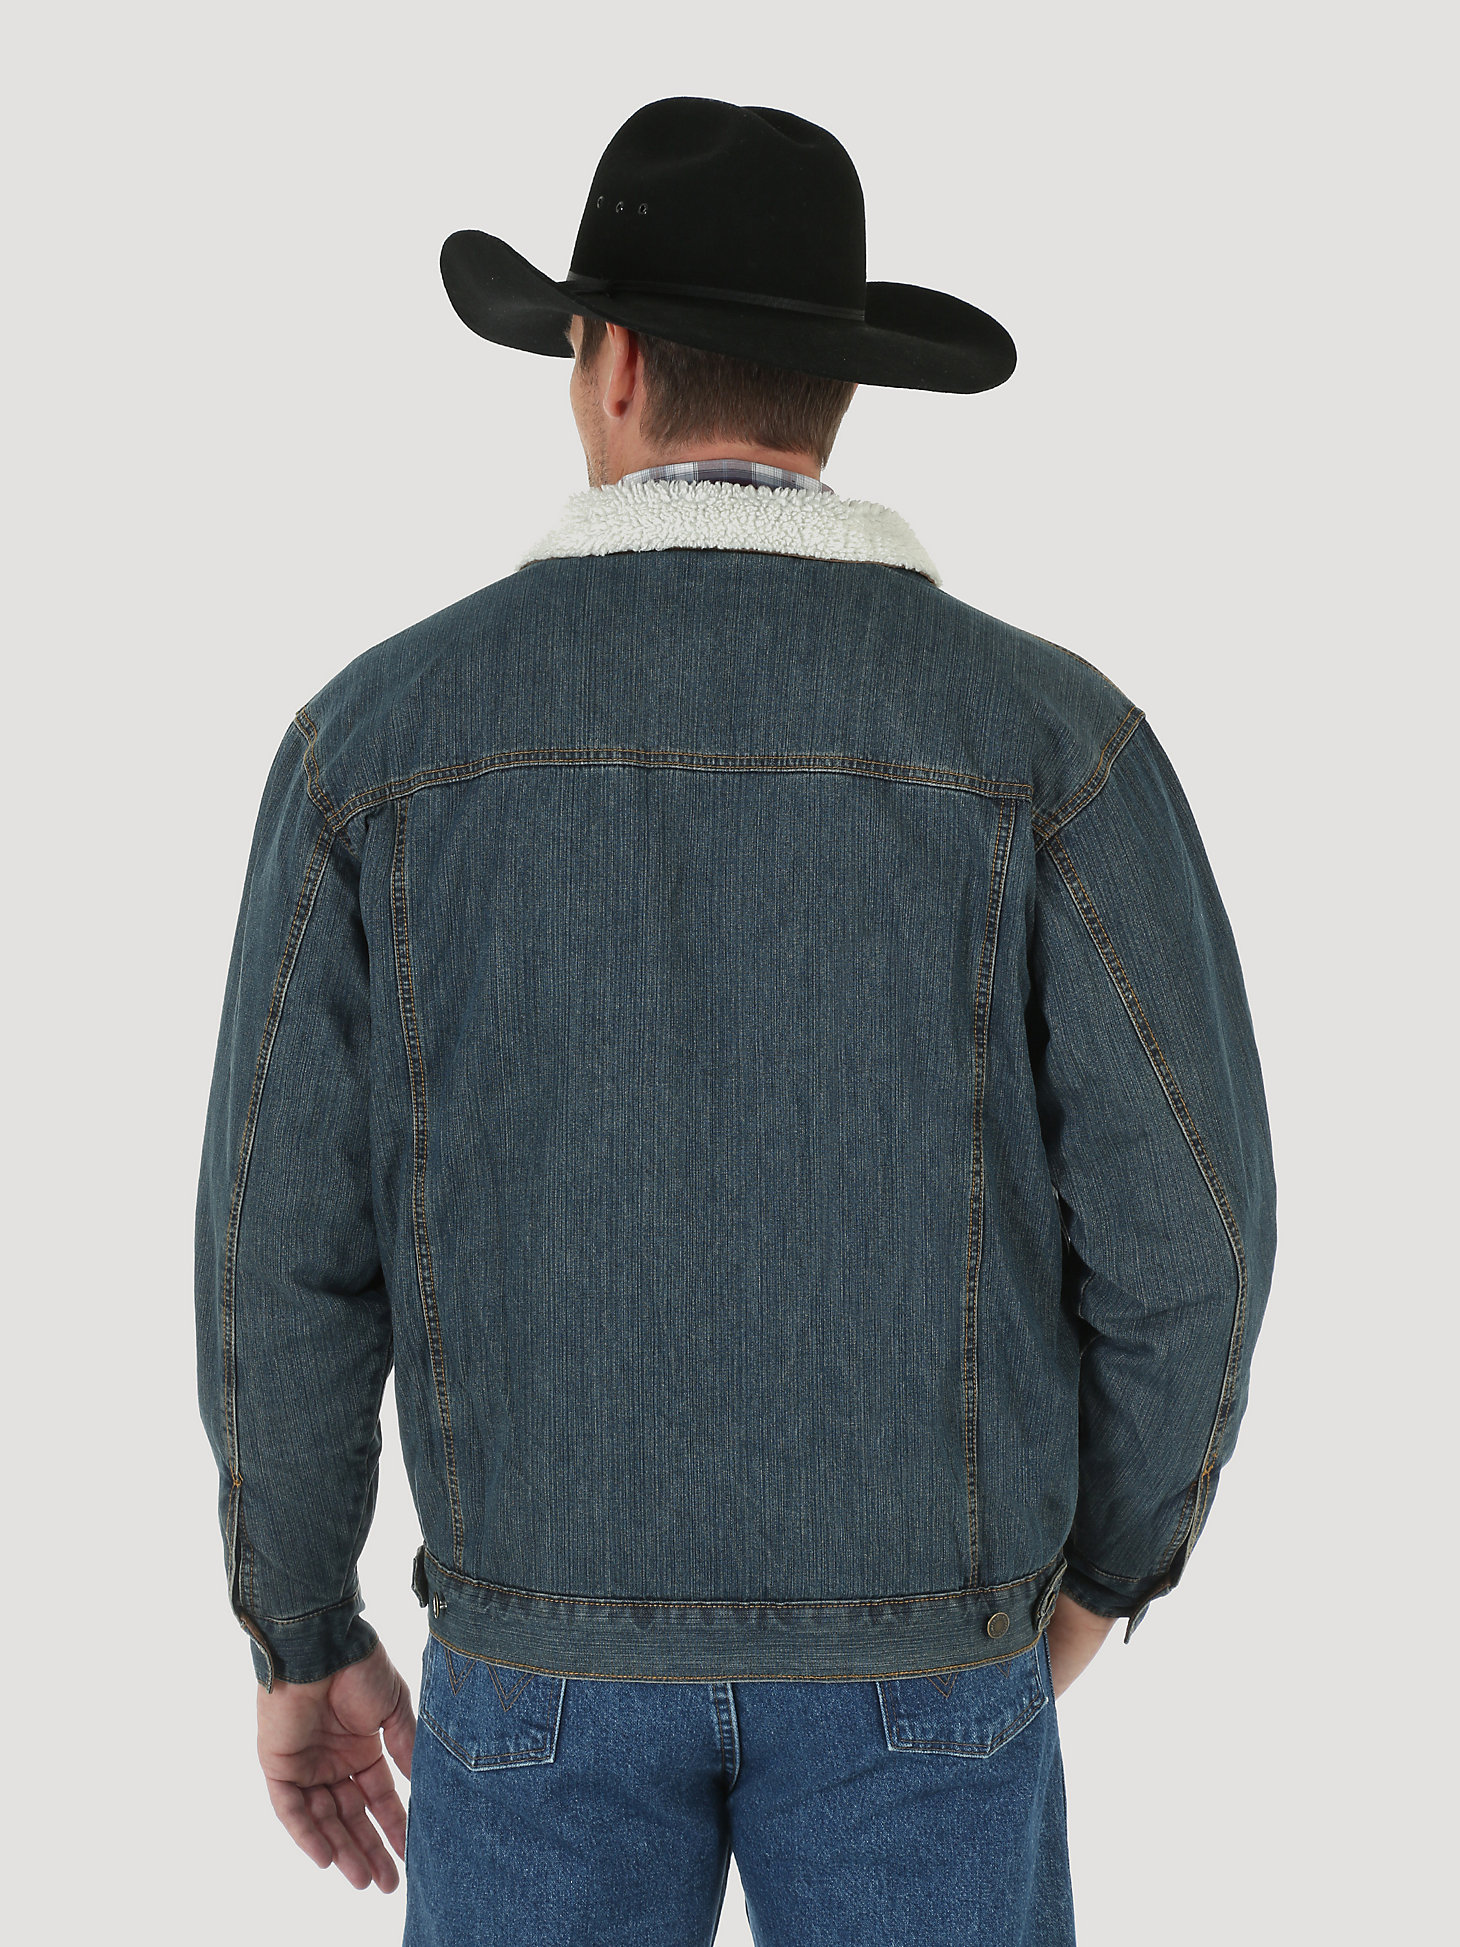 Wrangler® Western Styled Sherpa Lined Denim Jacket in Rustic alternative view 3